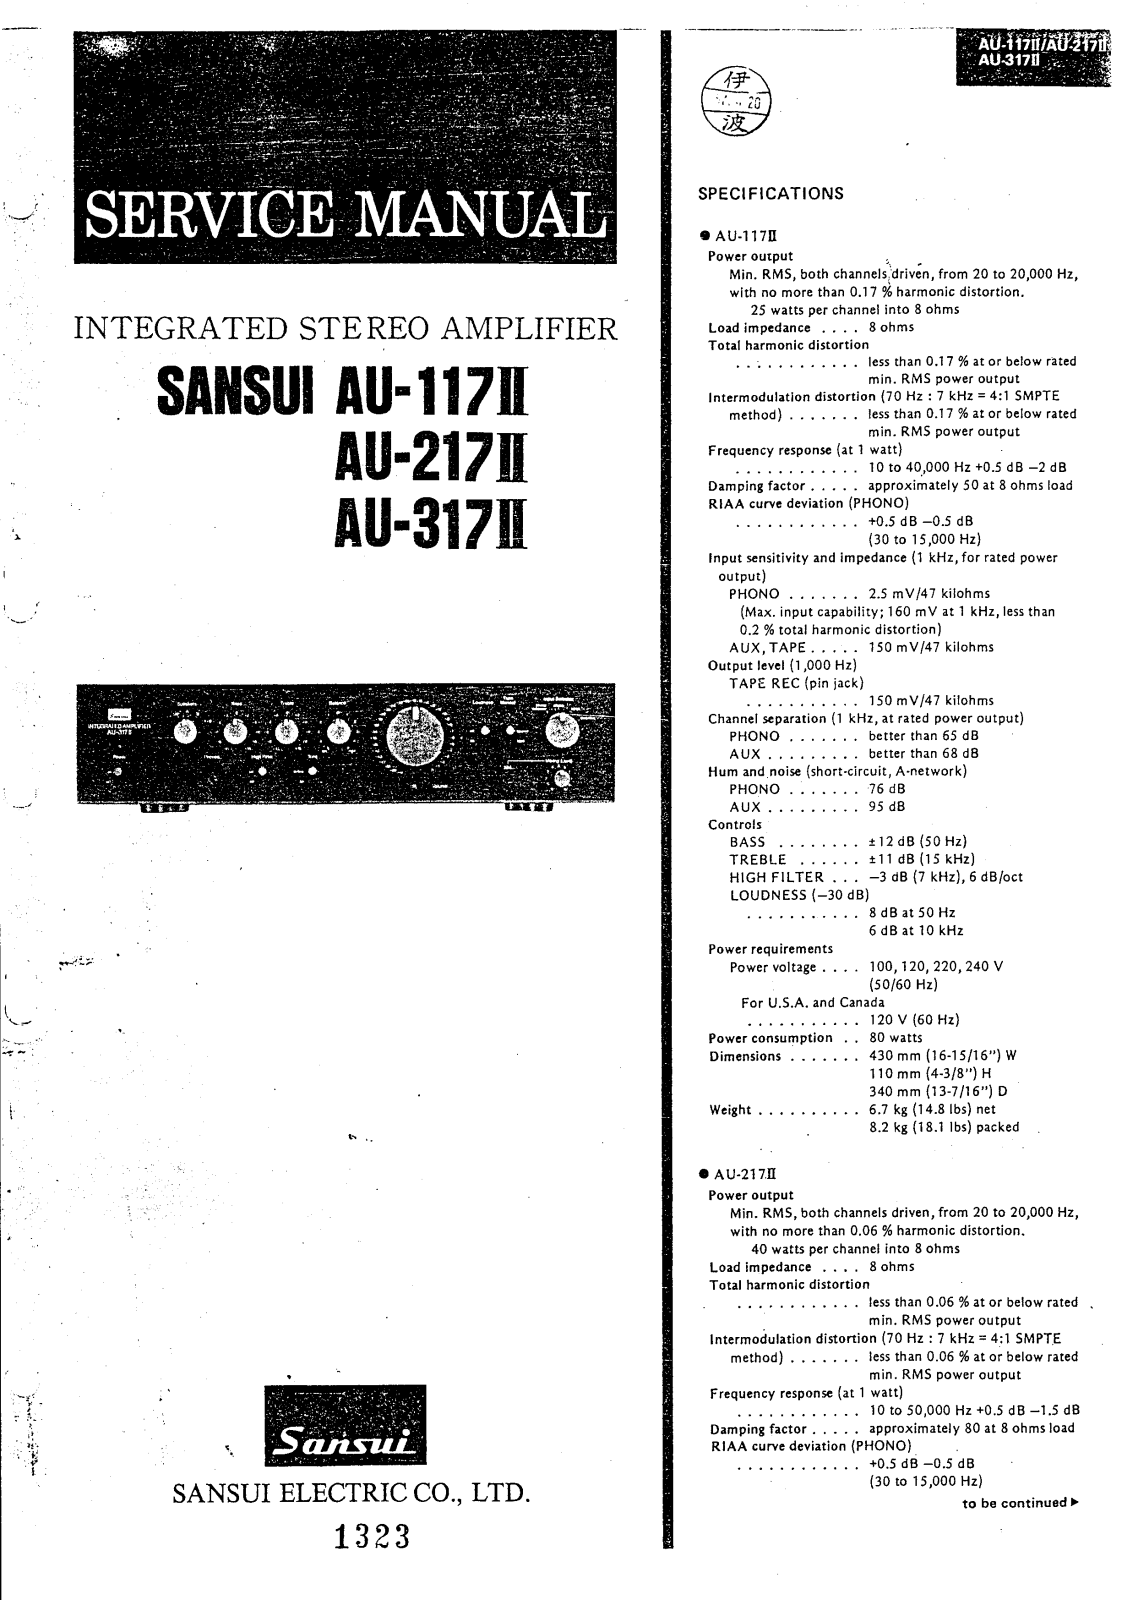 Sansui AU-117 Service Manual